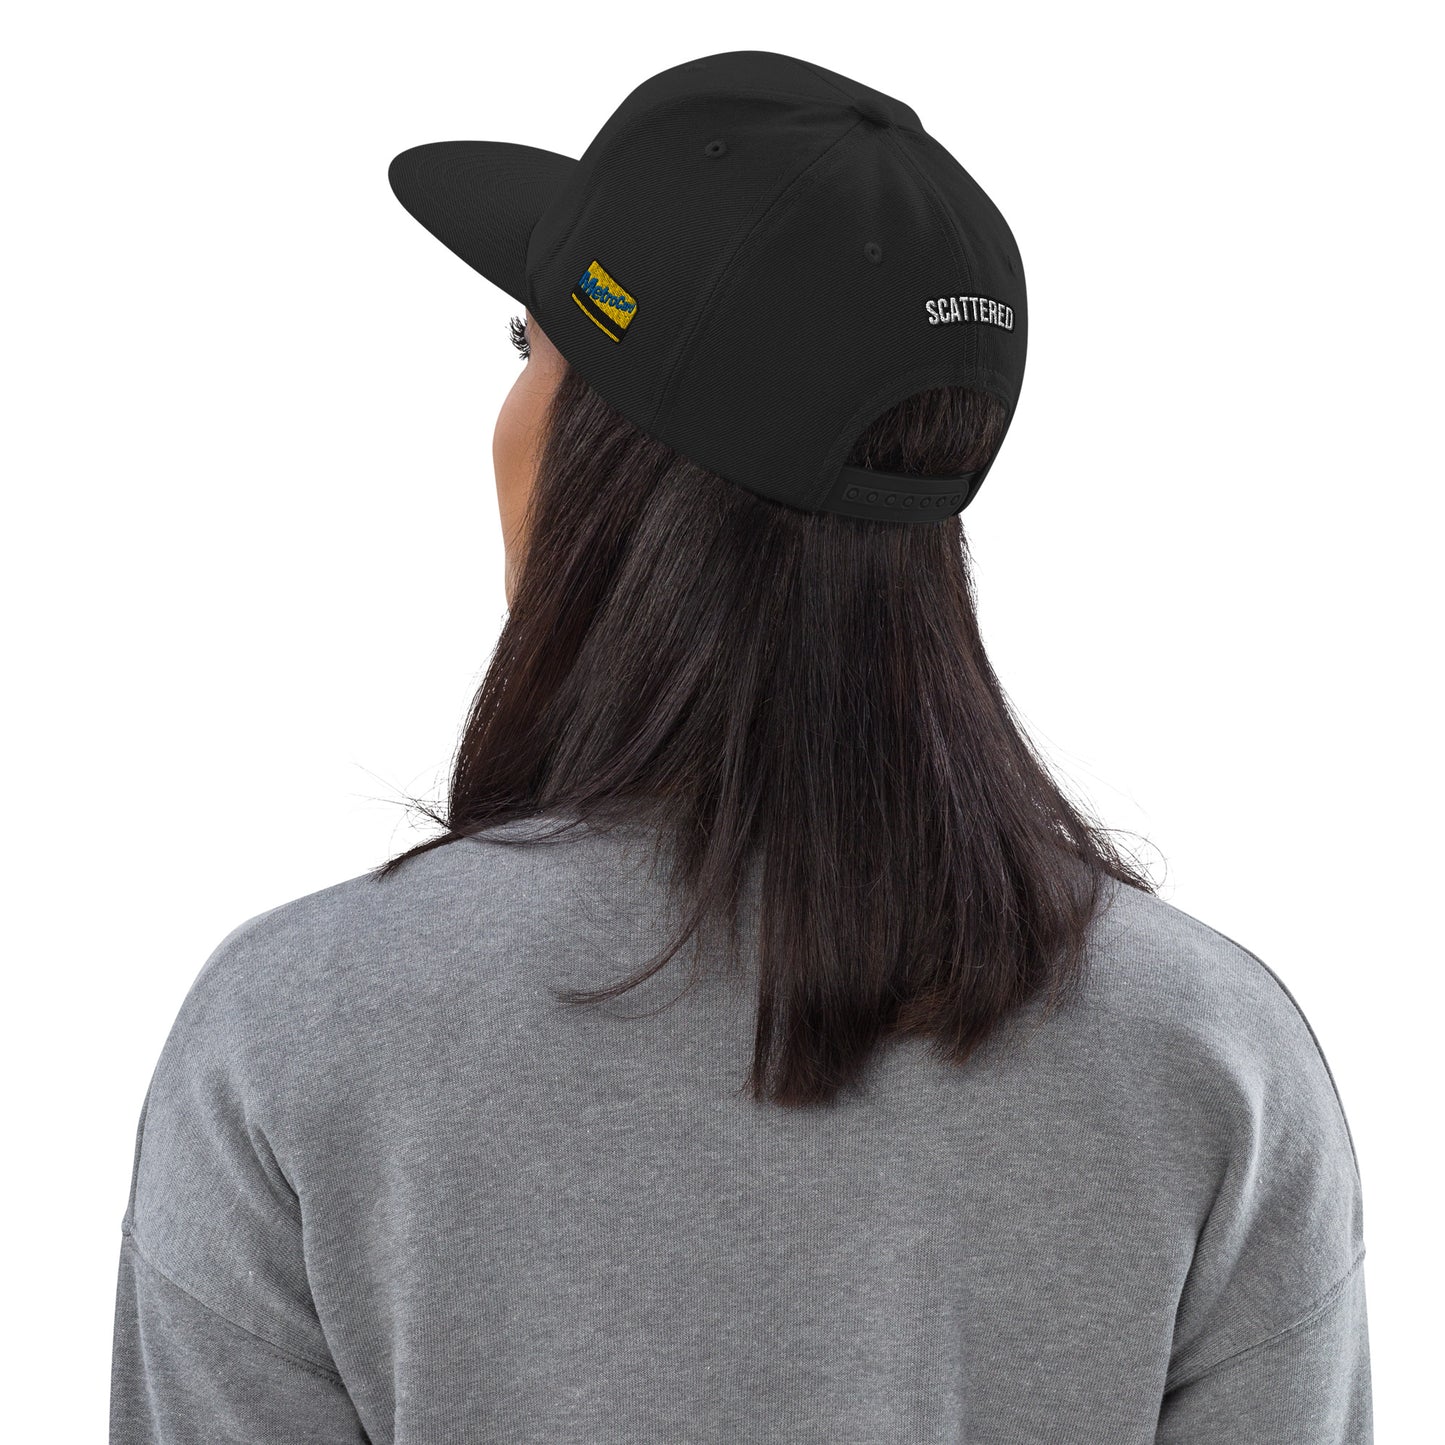 New York Apple Logo Embroidered Black Snapback Hat (Metro Card) Scattered Streetwear